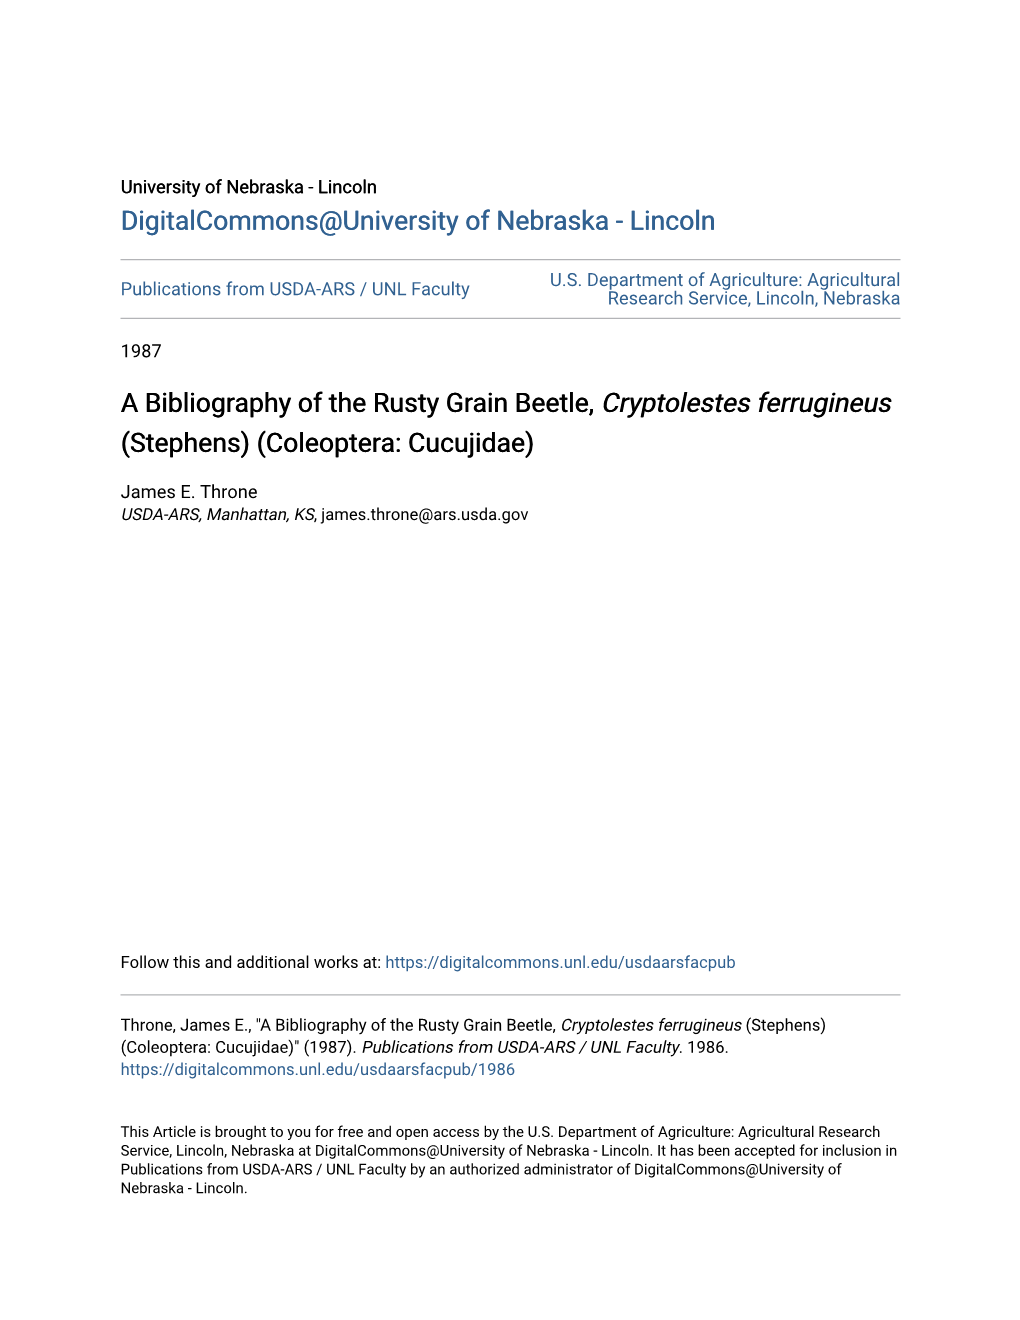 A Bibliography of the Rusty Grain Beetle, &lt;I&gt;Cryptolestes Ferrugineus